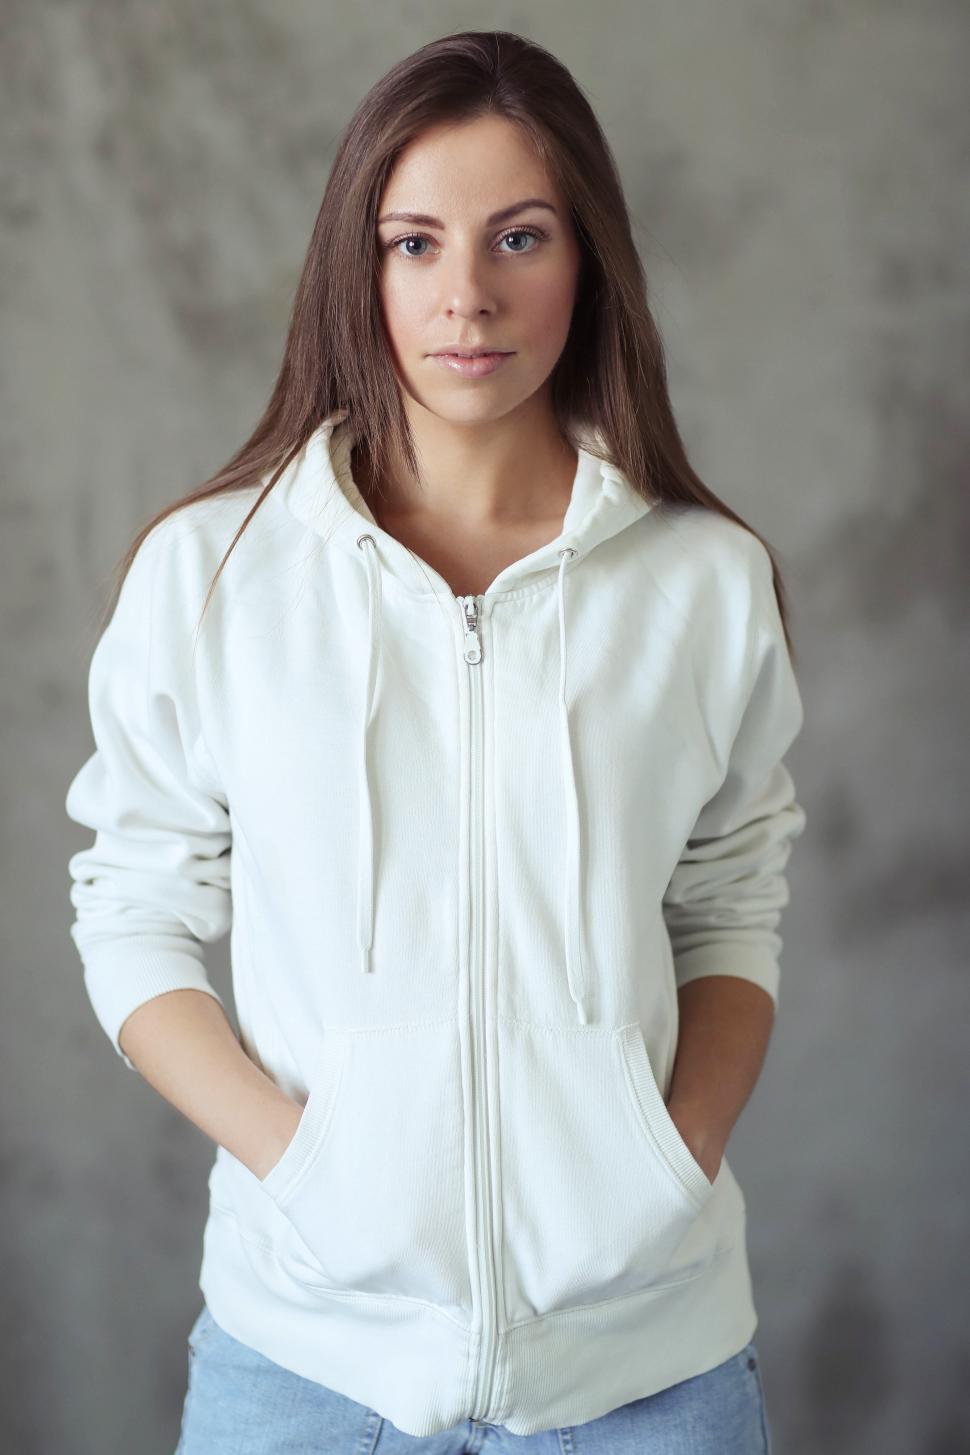 Free Image of Woman in white sweatshirt jacket 